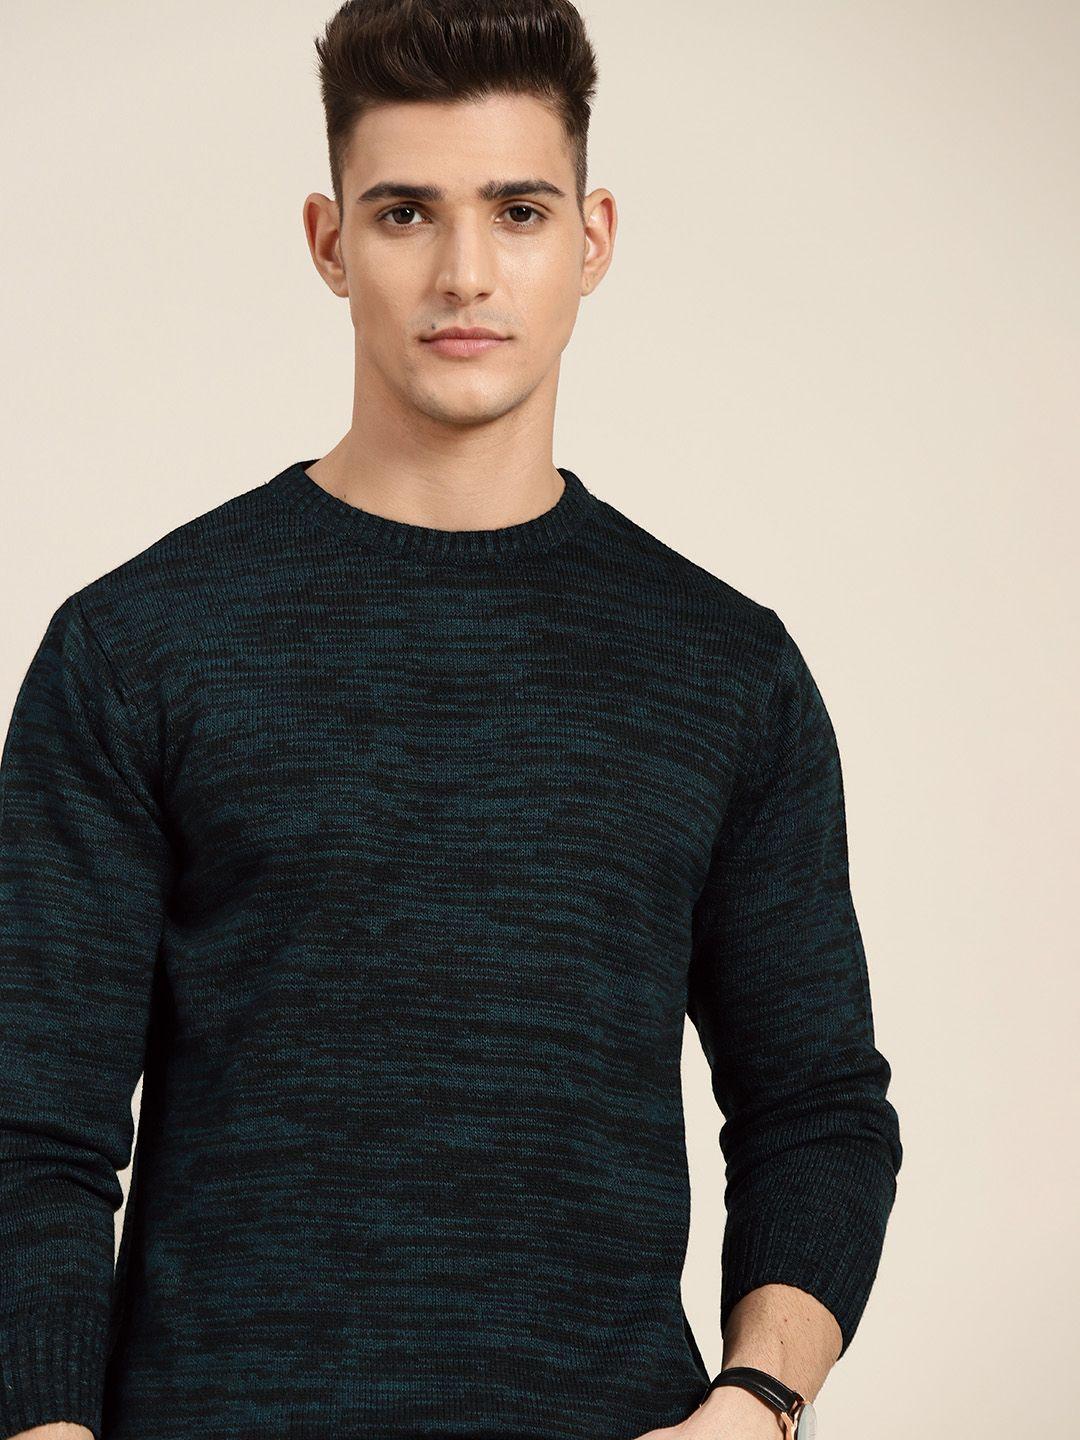 invictus men navy blue & black abstract self-design acrylic pullover sweater